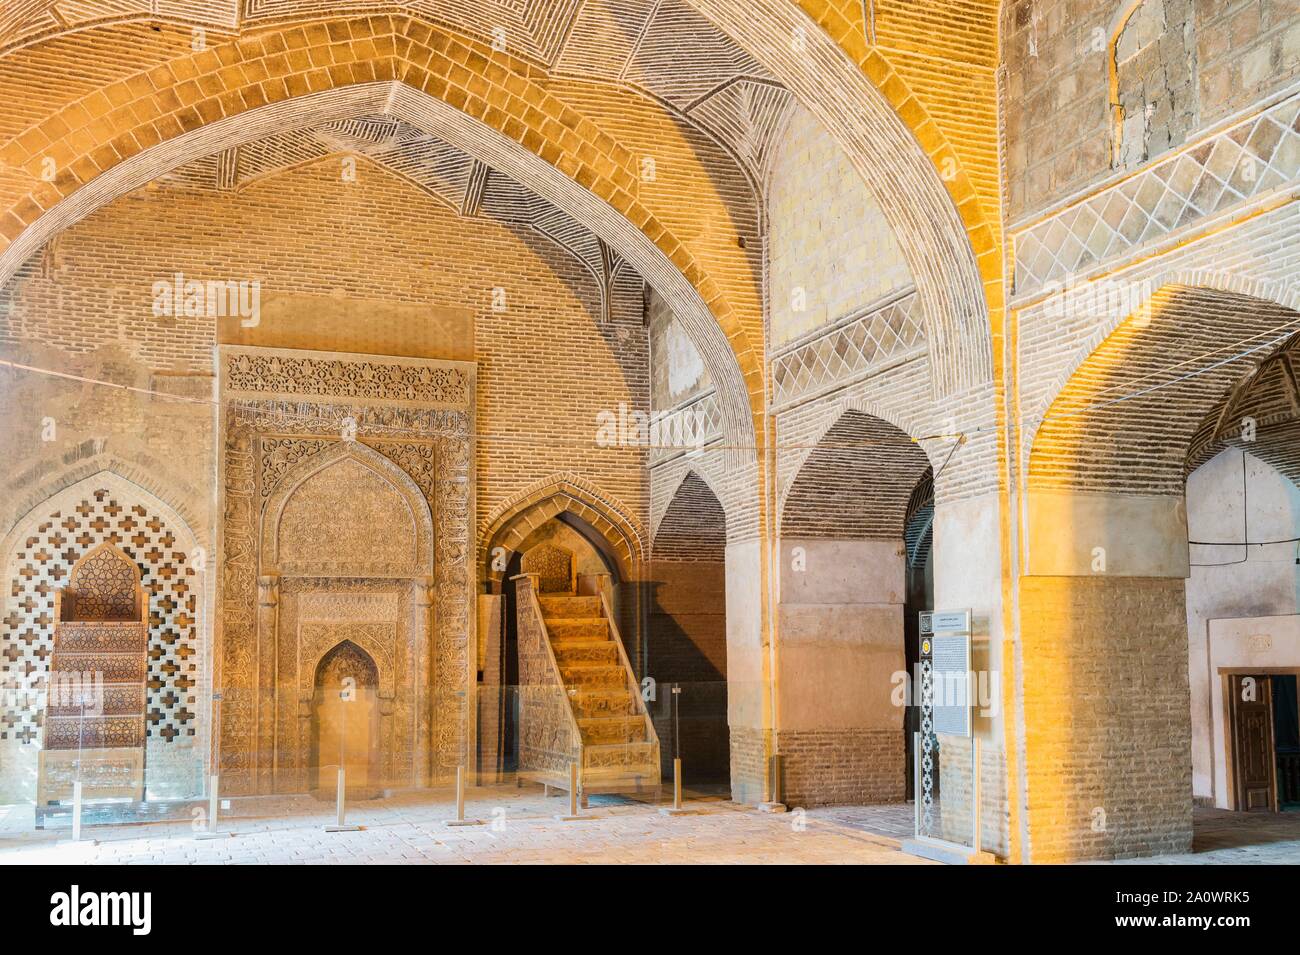 Mihrab and Minbar, South Iwan, Masjed-e Djame or Jameh Mosque, Esfahan, Iran Stock Photo